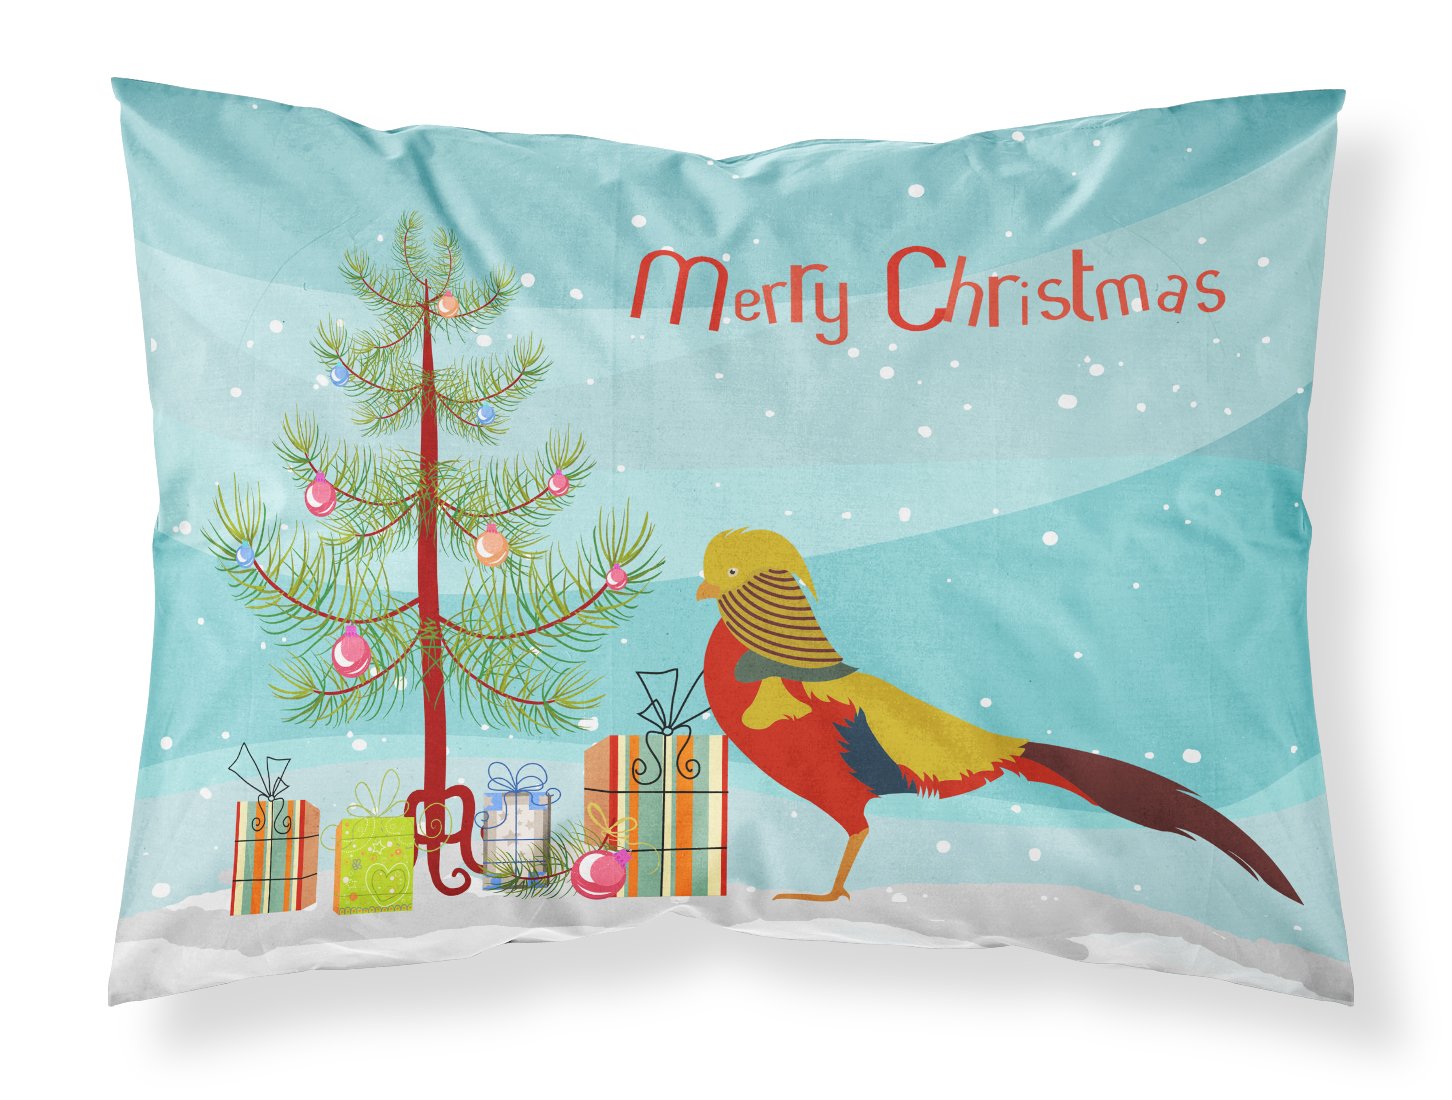 Golden or Chinese Pheasant Christmas Fabric Standard Pillowcase BB9295PILLOWCASE by Caroline's Treasures